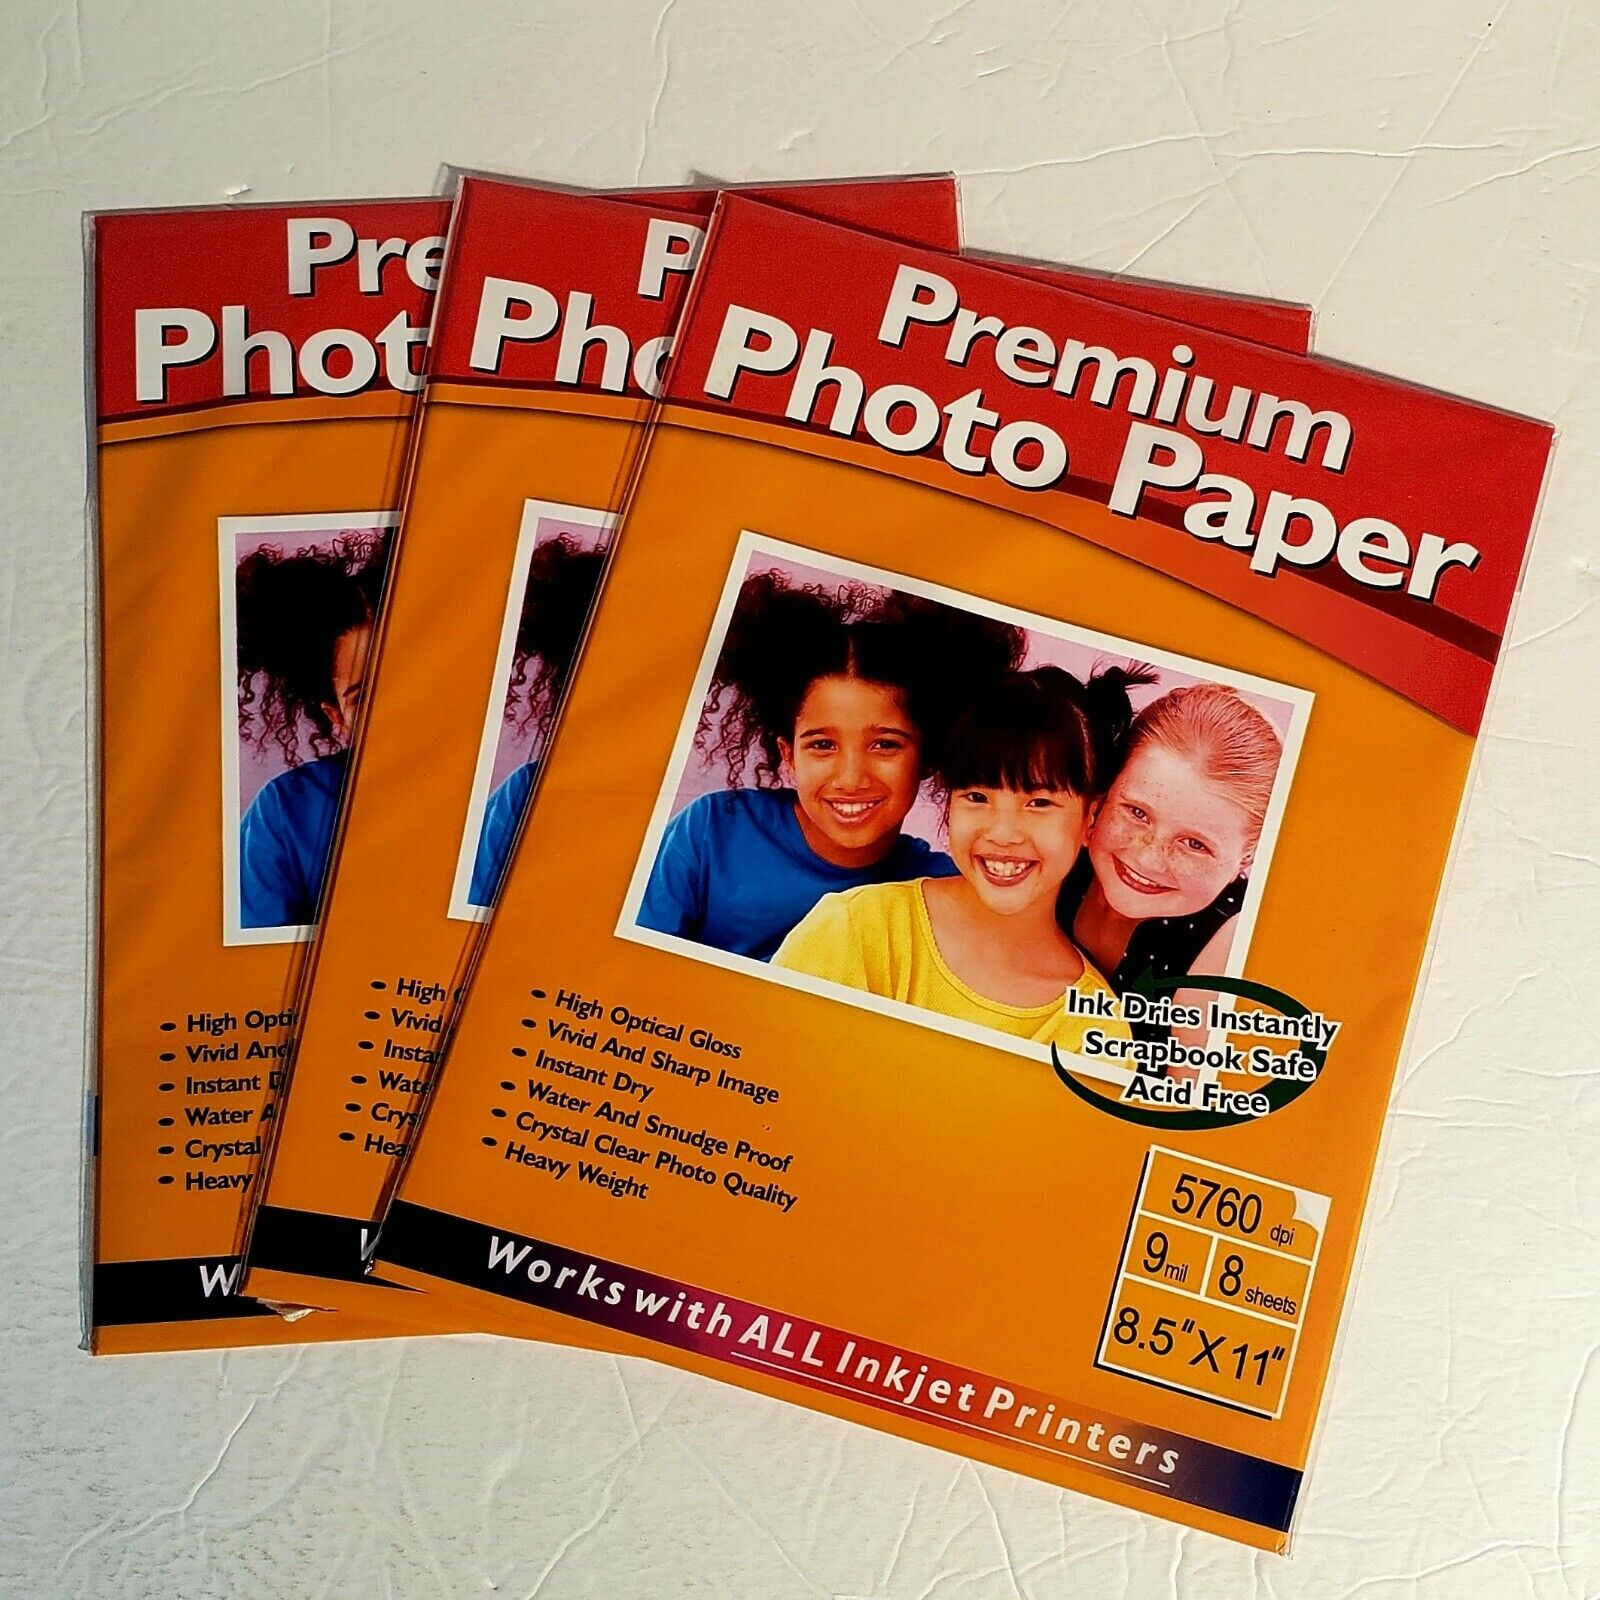 Premium Photo Paper High Optical Gloss 8 Sheets 8.5